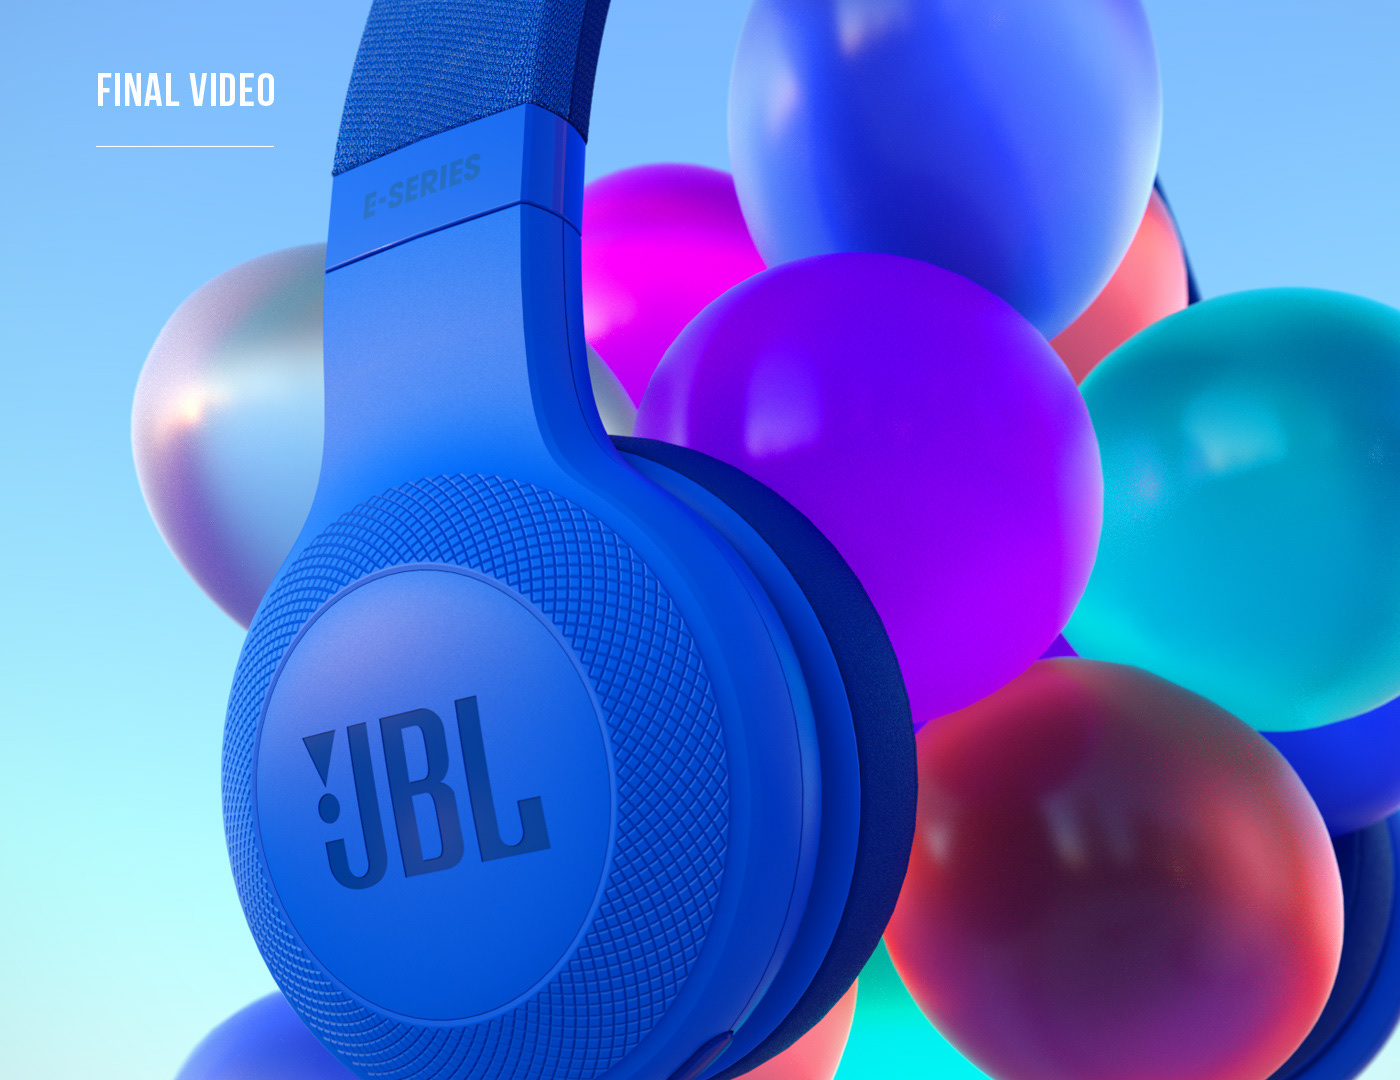 jbl e series e55 E45 headphones bluetooth music